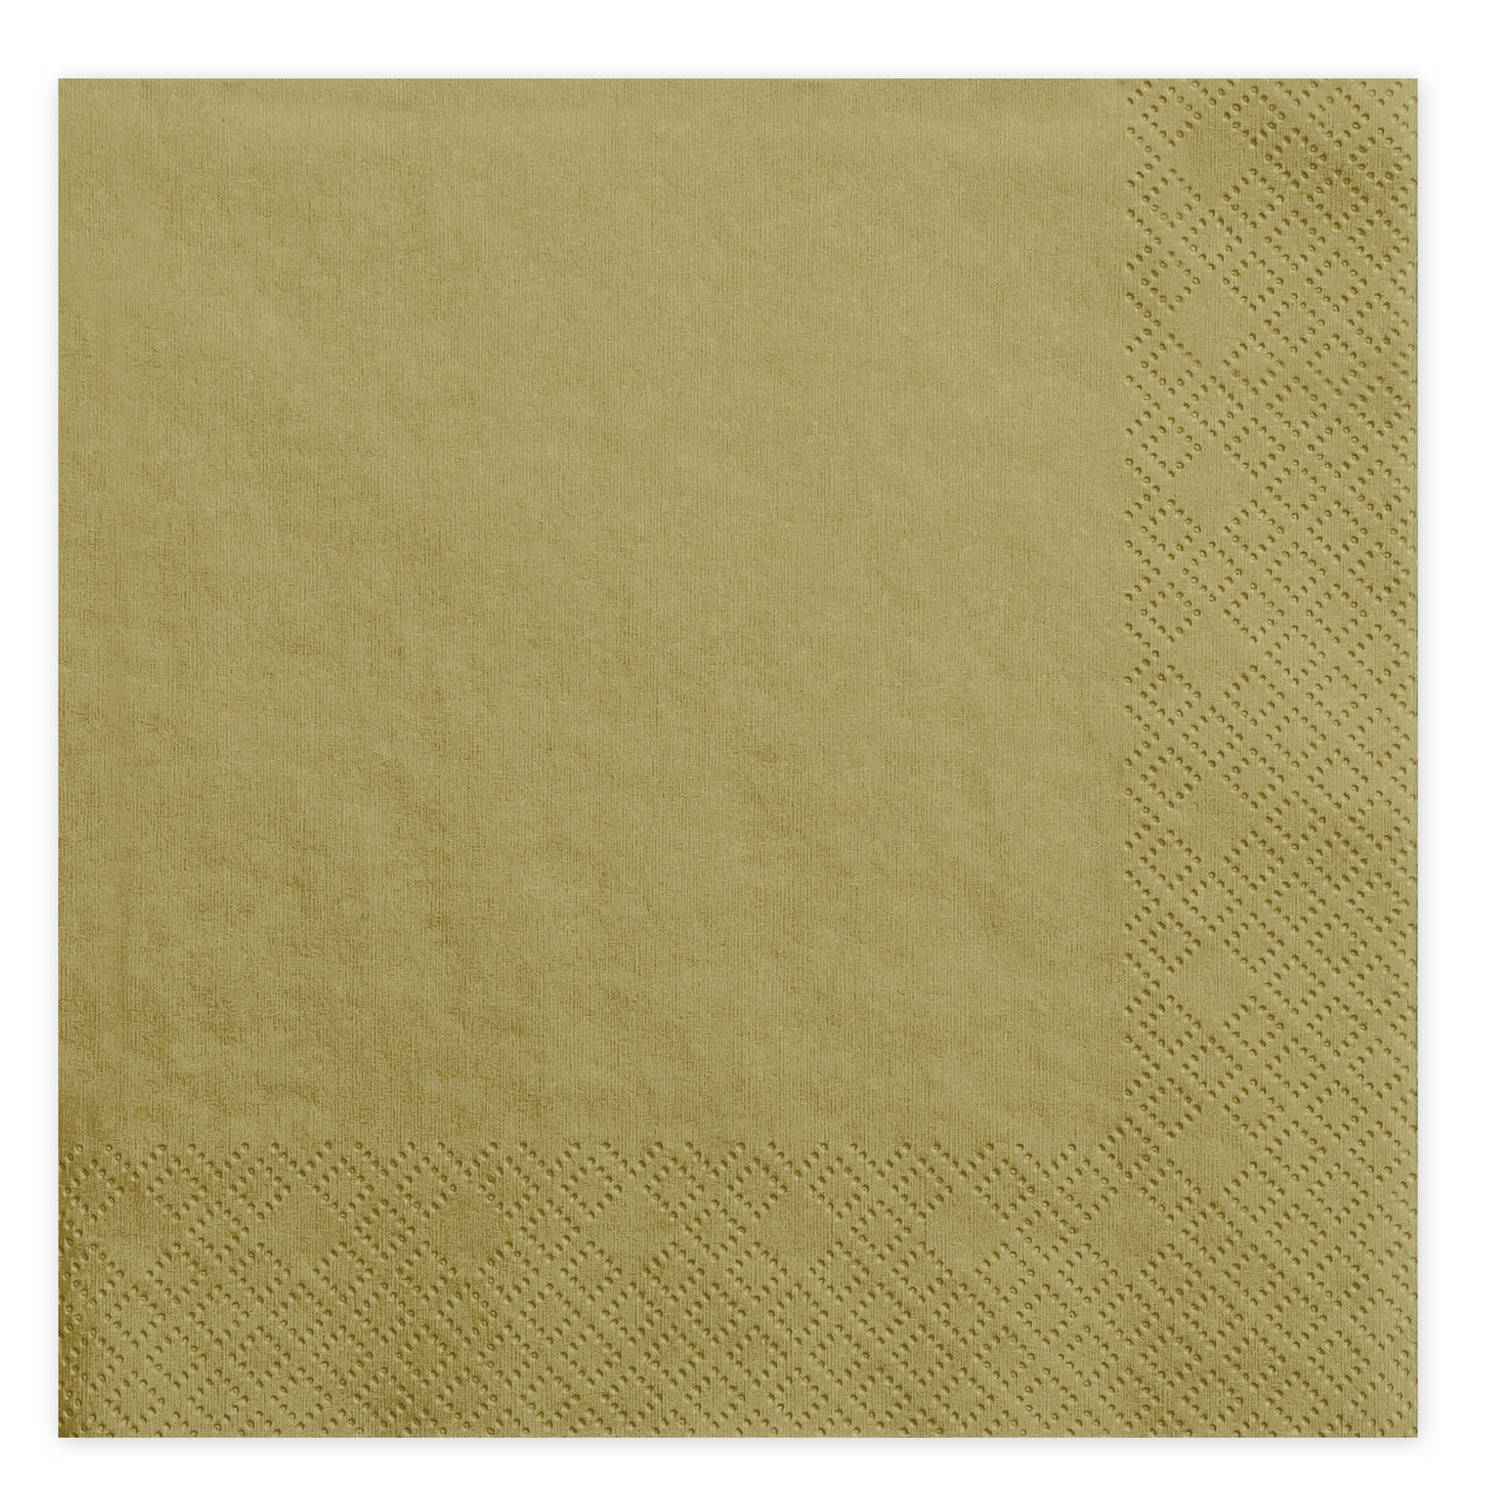 40x Papieren tafel servetten goud kleurig 33 x 33 cm - Feestservetten